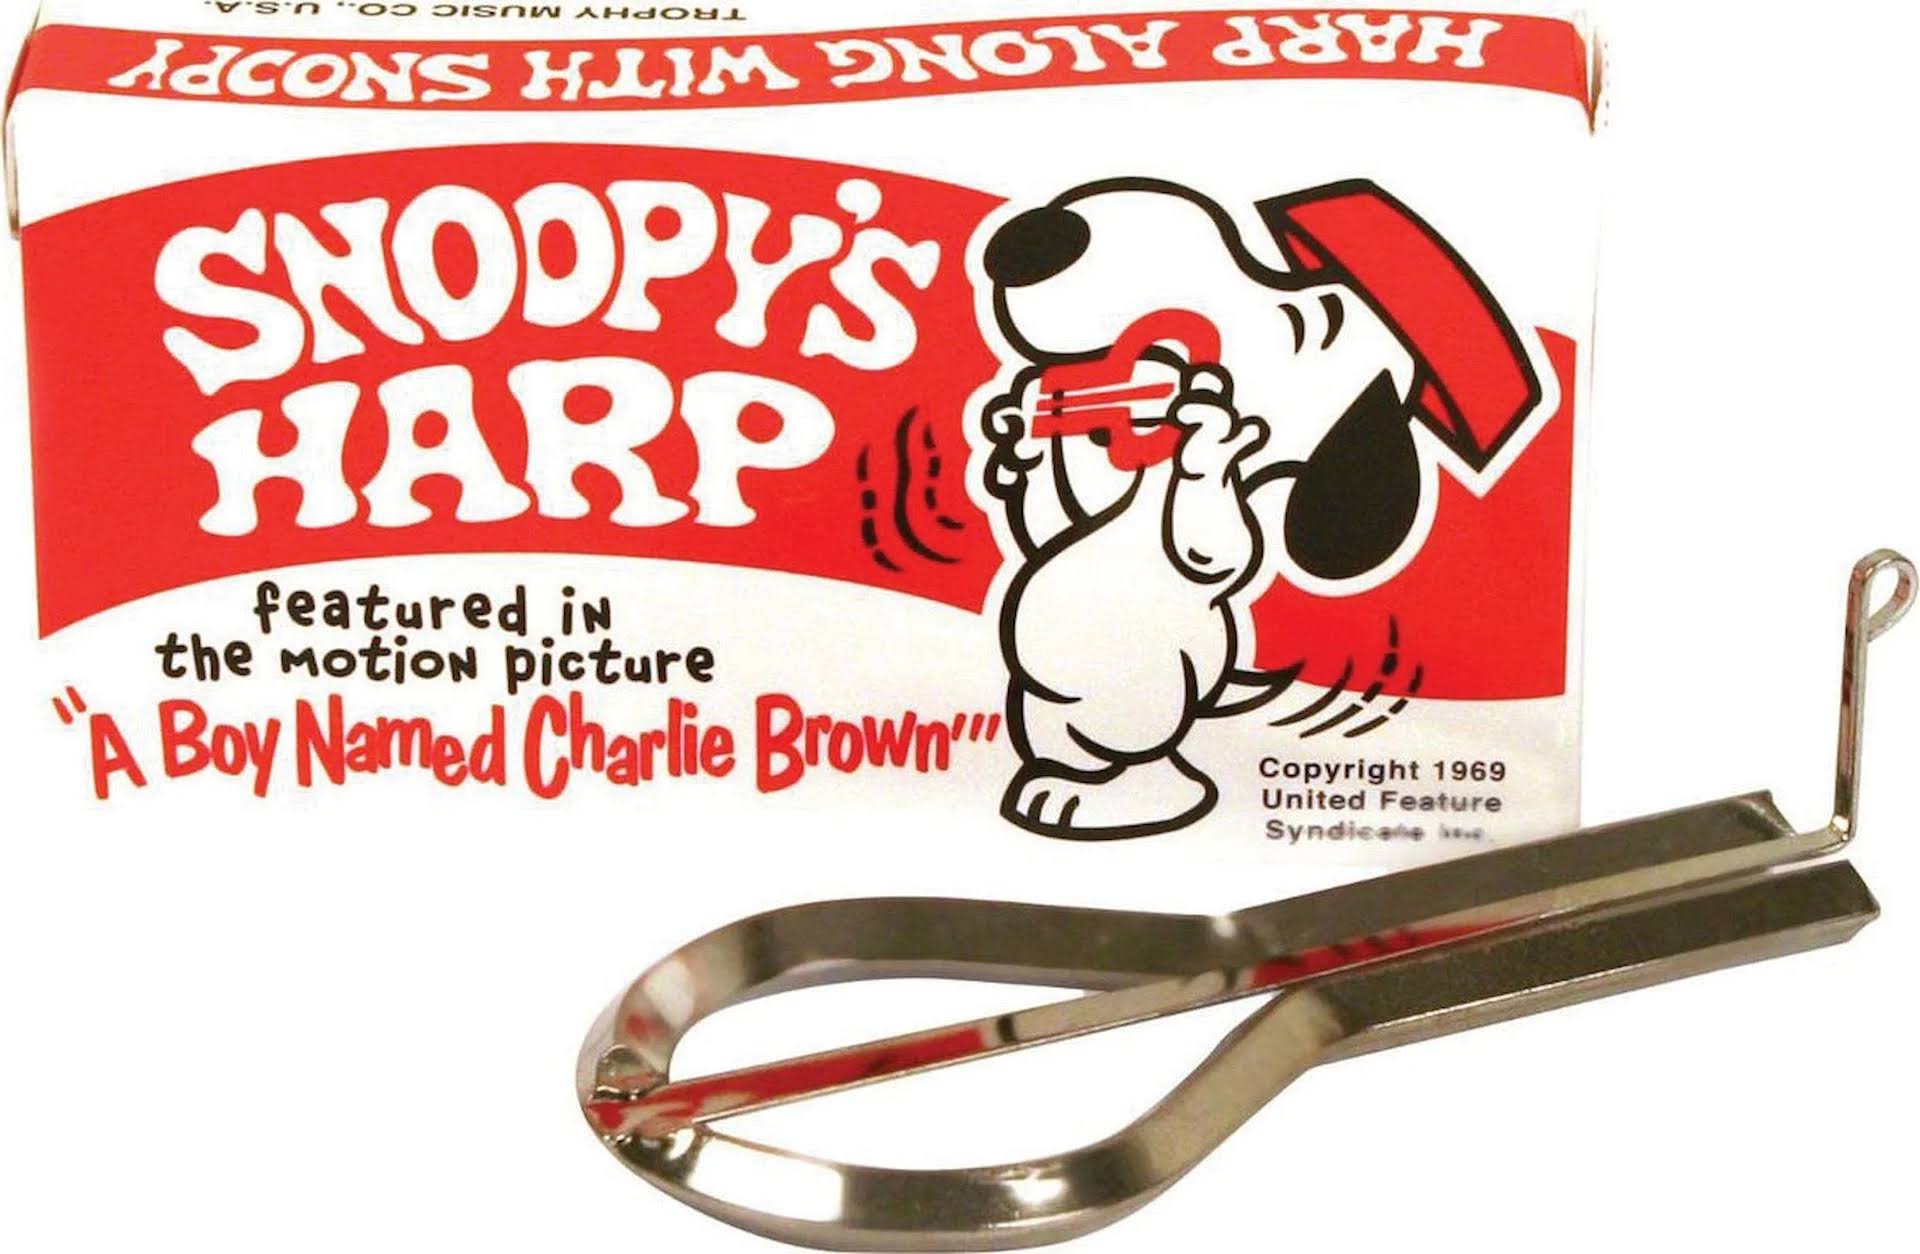 Generic Grover Snoopy Jaw Harp